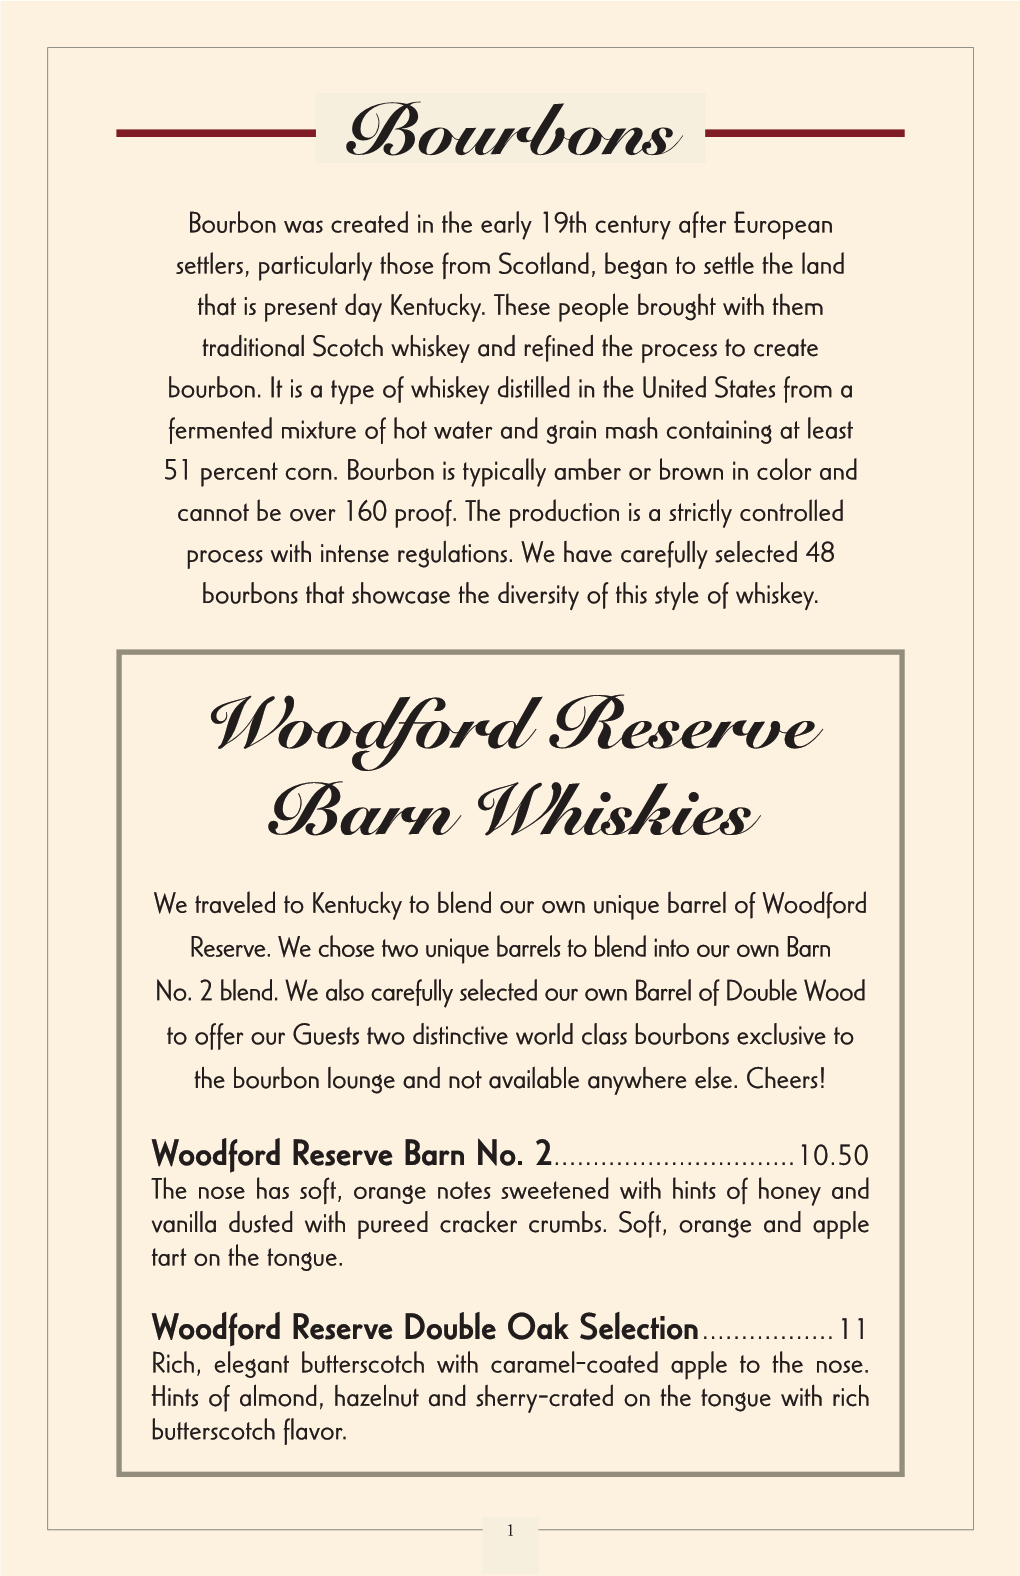 Bourbons Woodford Reserve Barn Whiskies